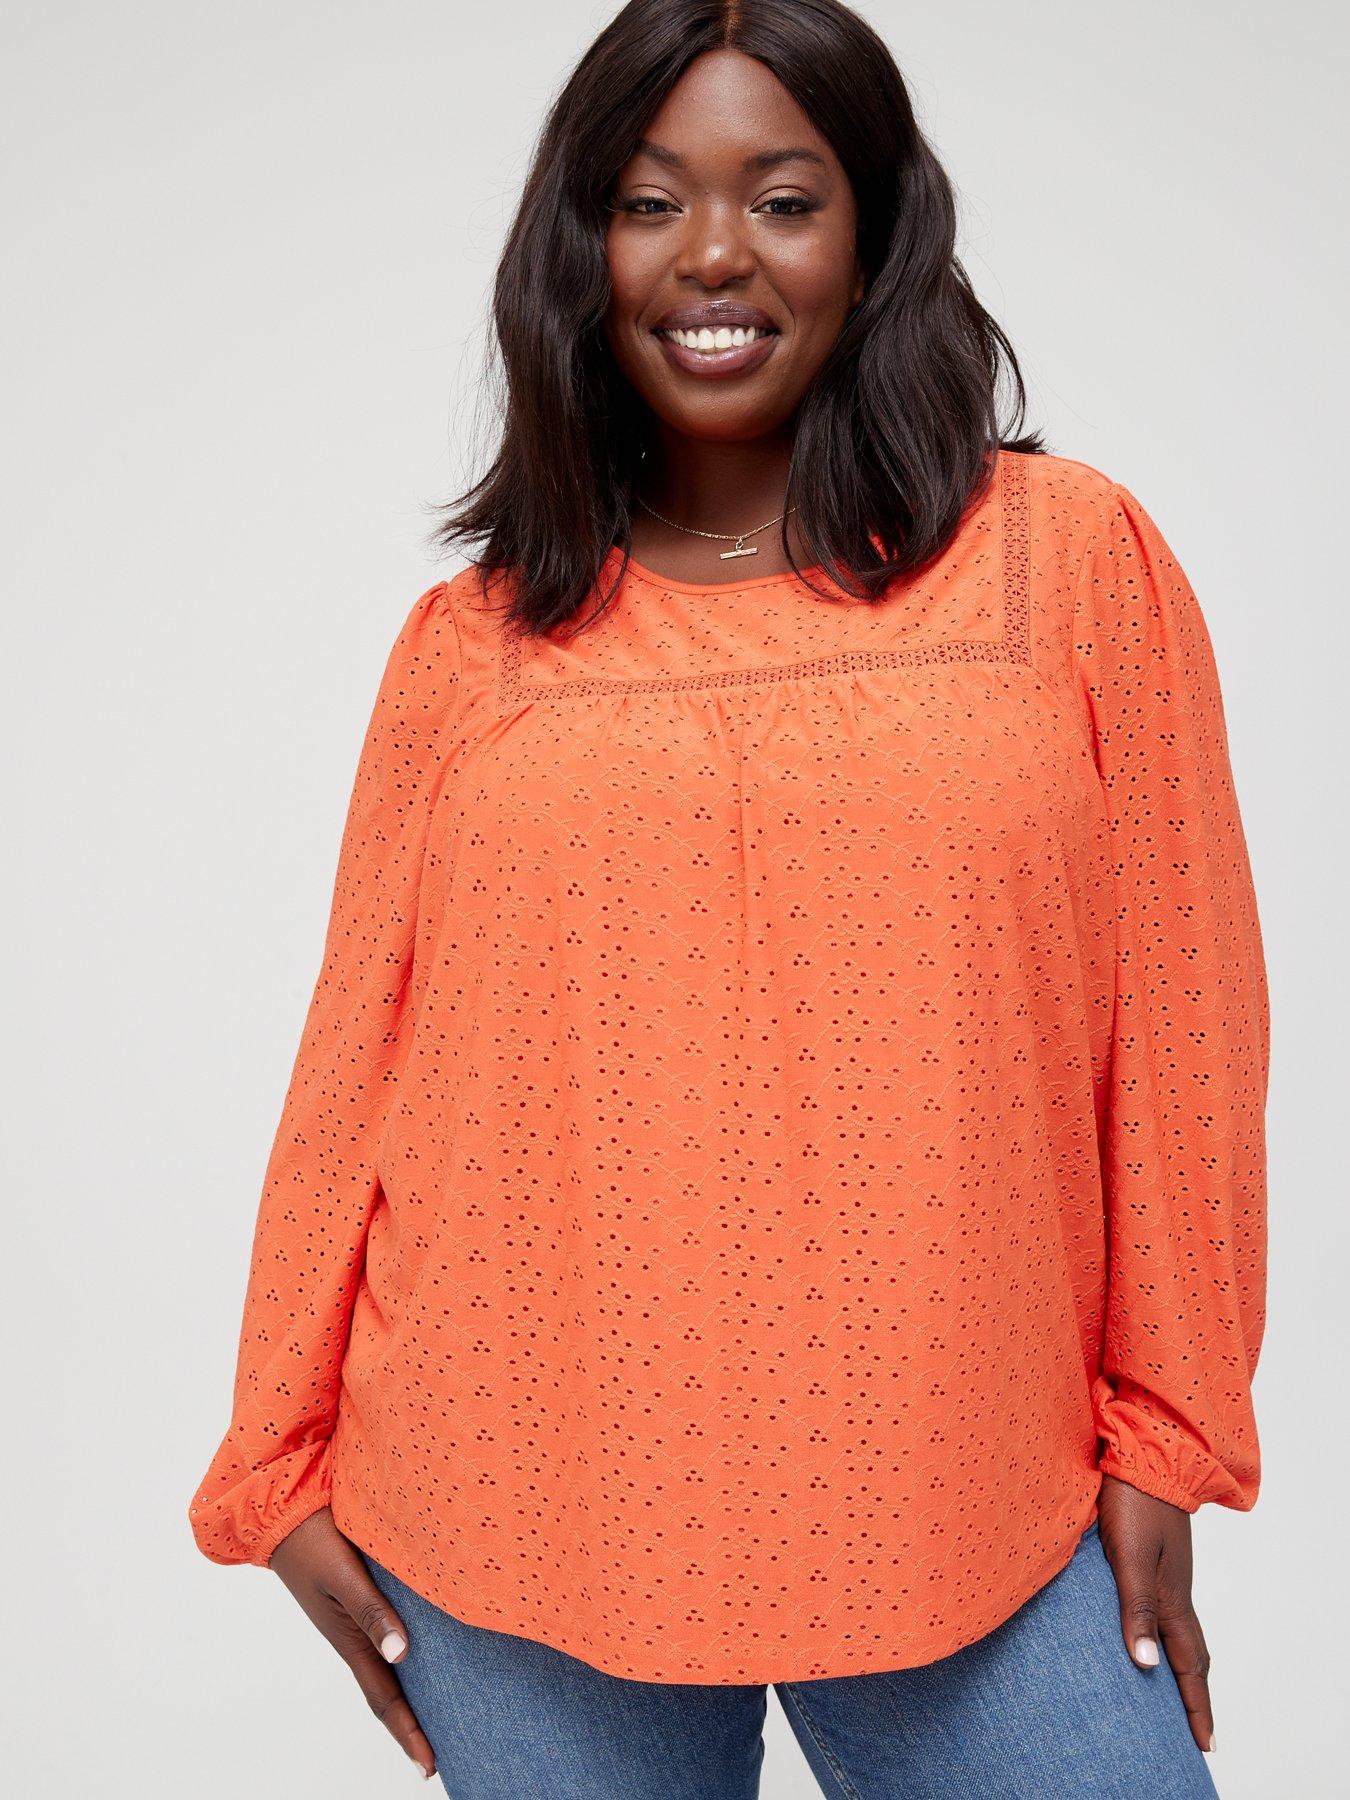 discount 63% White/Black/Orange L Natura blouse WOMEN FASHION Shirts & T-shirts Blouse Print 